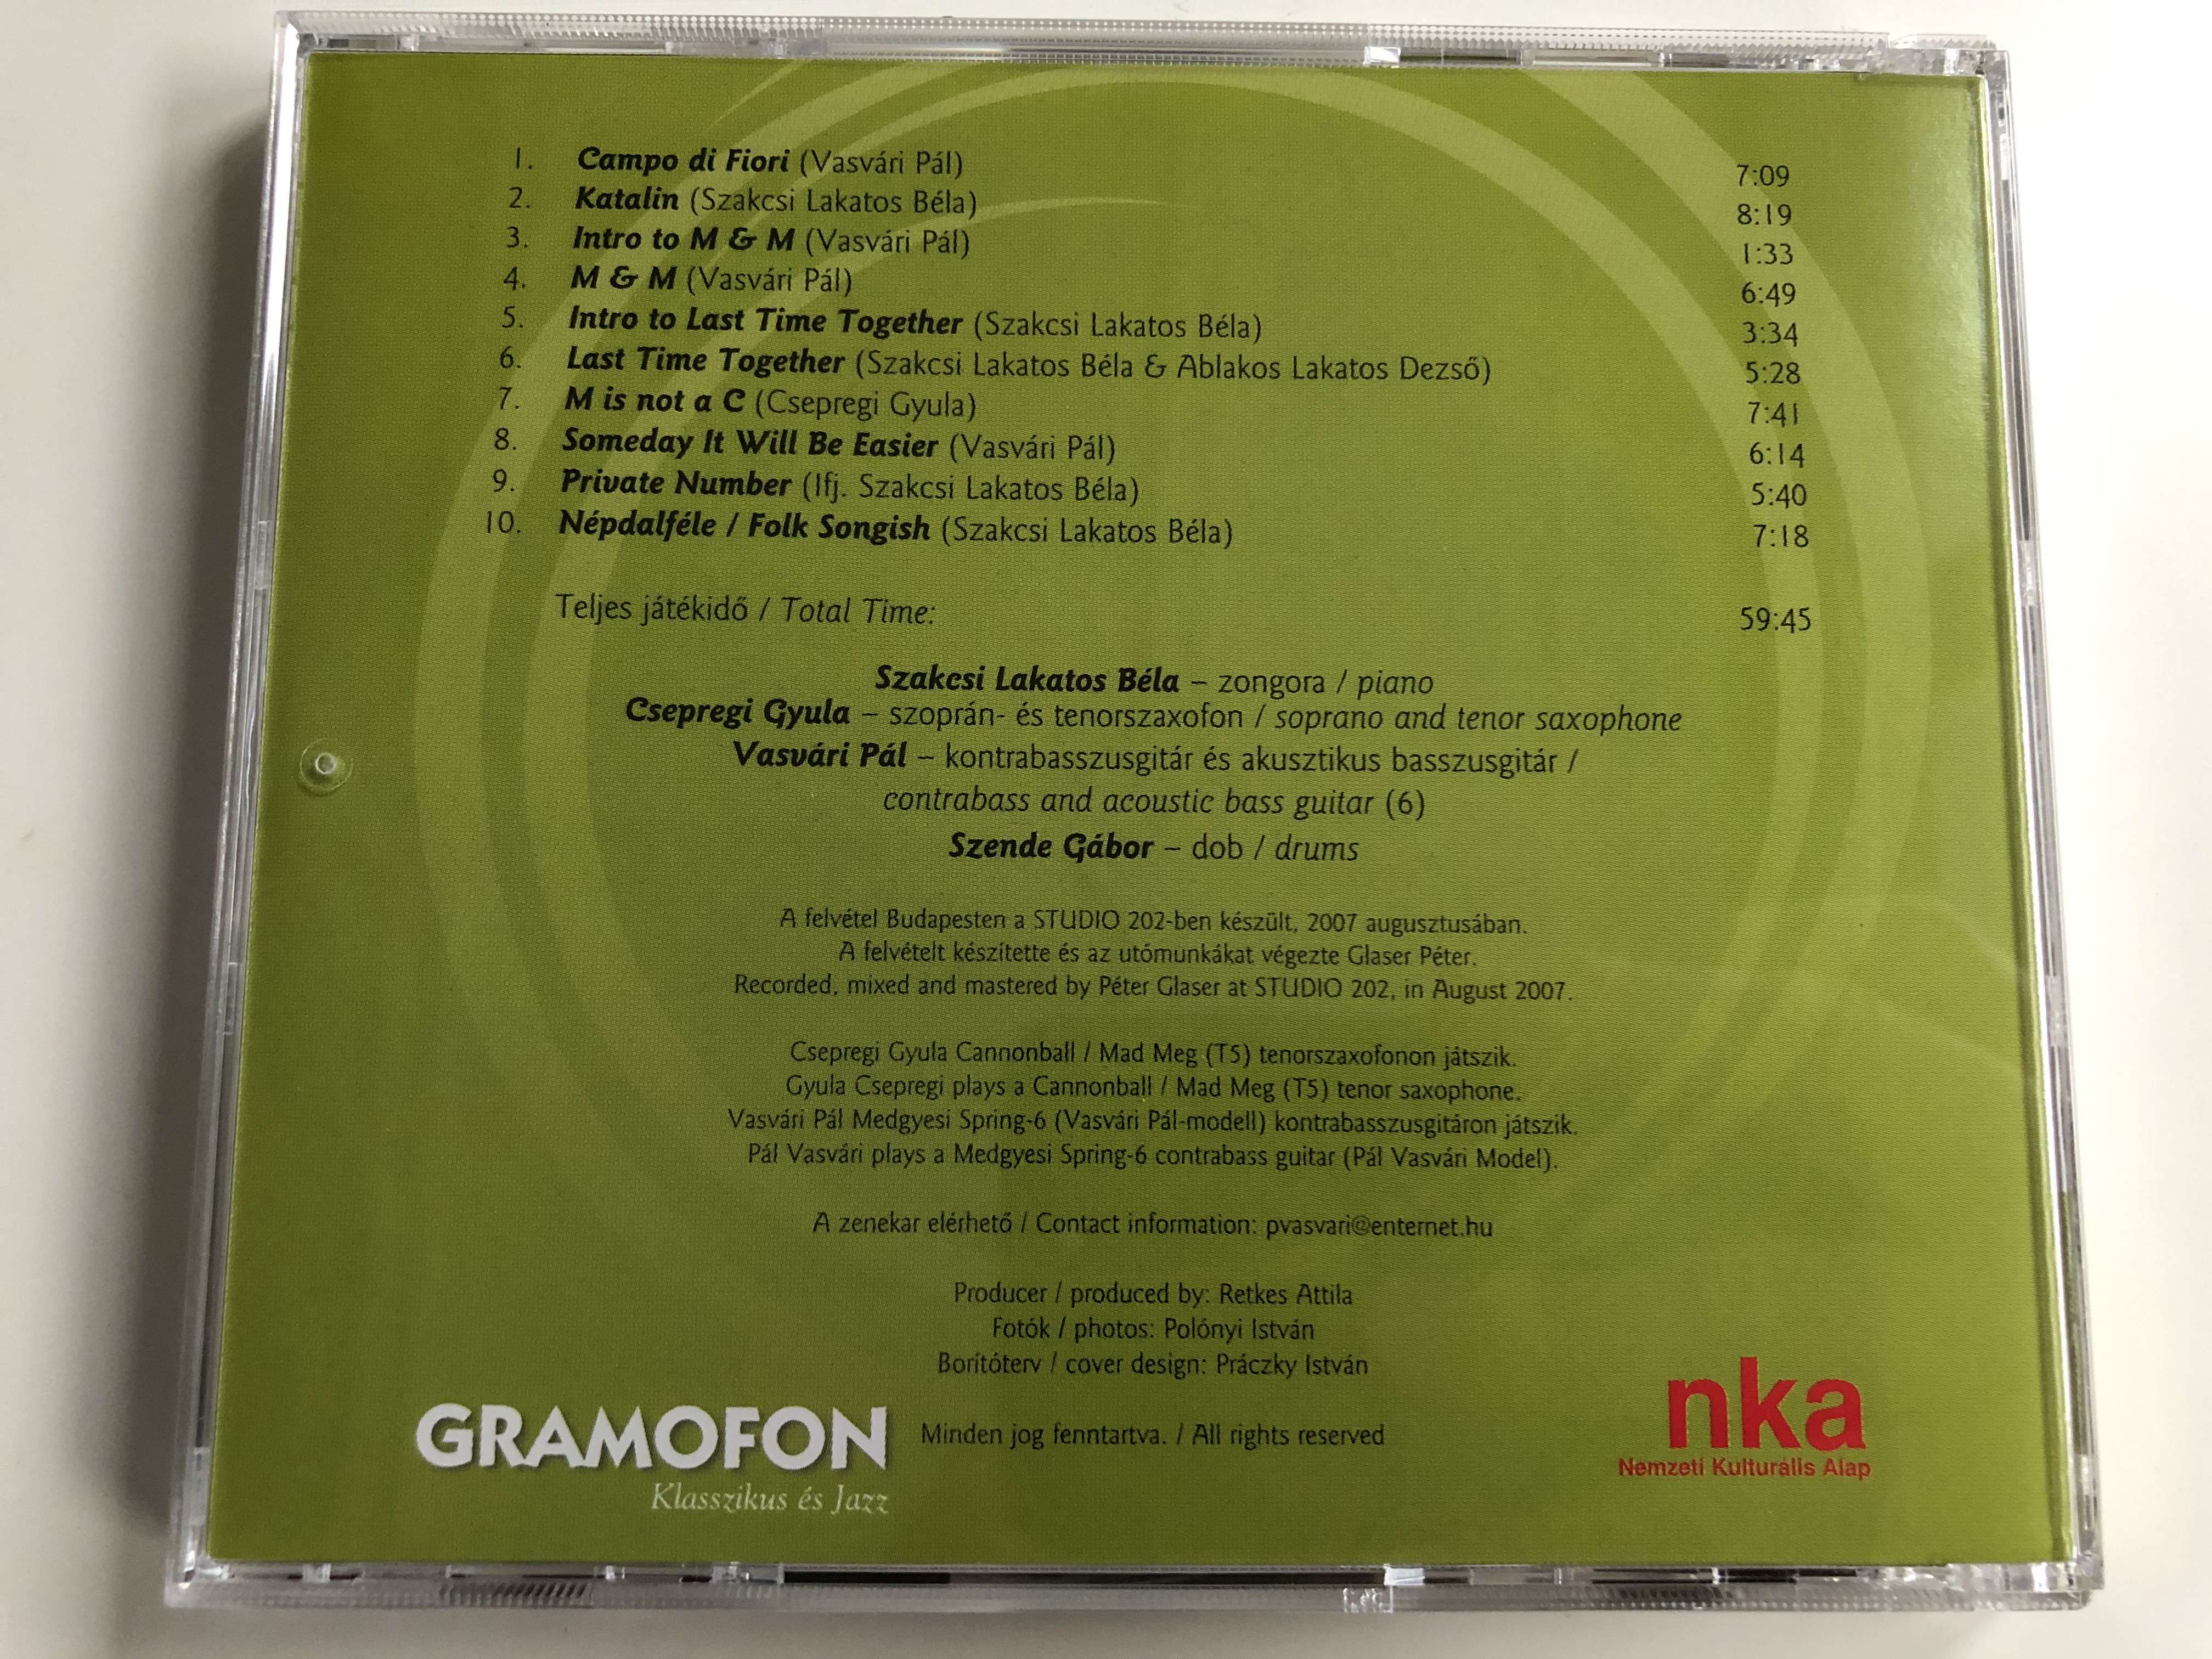 magyar-jazz-quartet-last-time-together-in-memoriam-javori-vilmos-ablakos-lakatos-dezso-gramofon-audio-cd-2007-kjcd-2007-01-8-.jpg